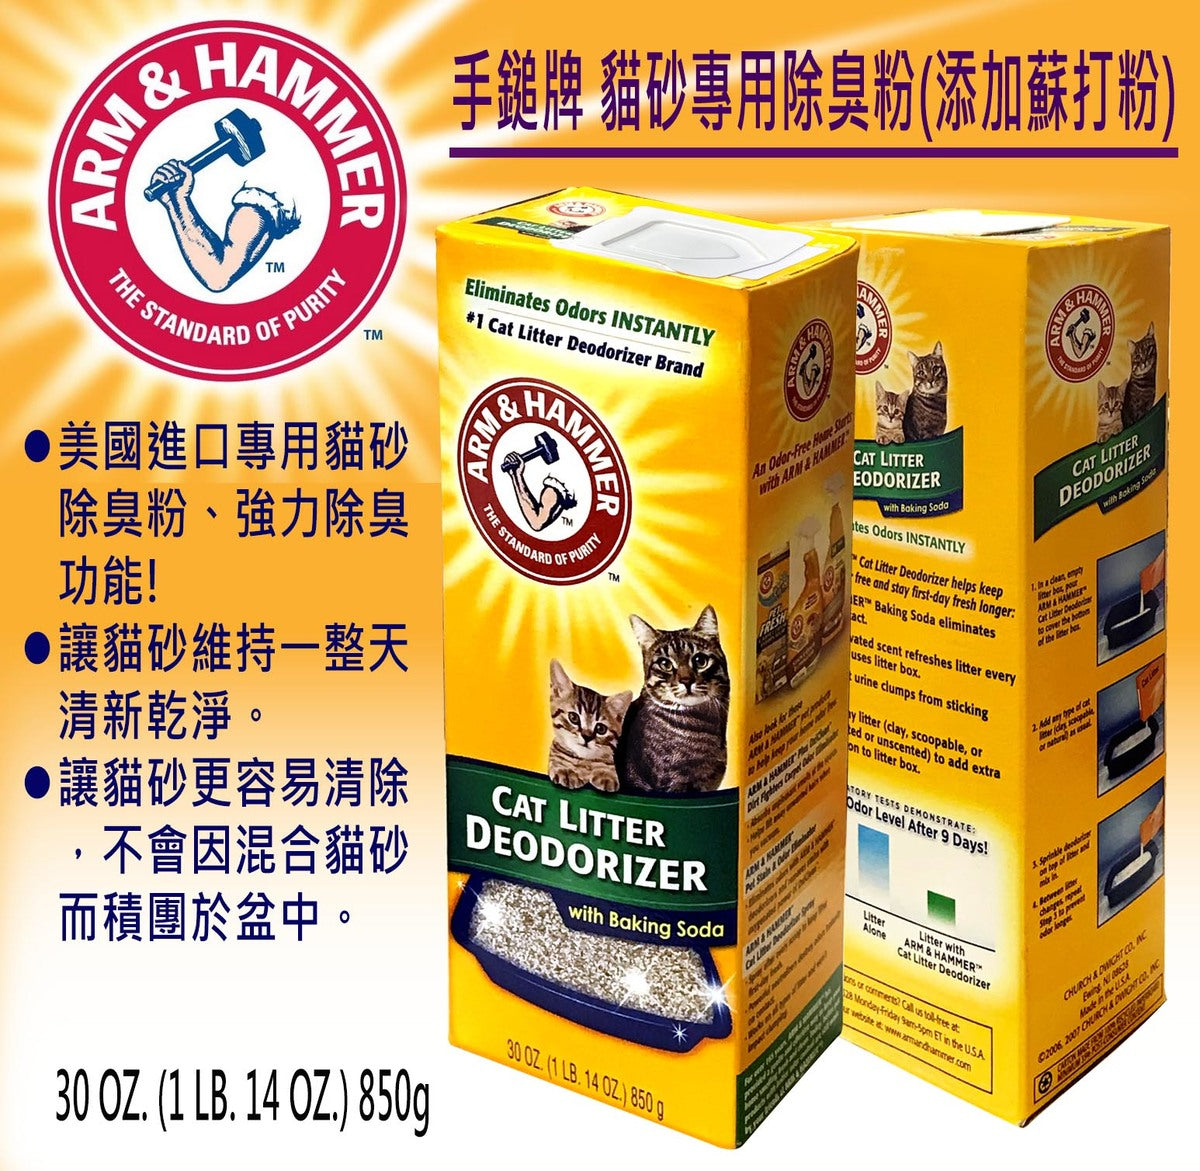 Hand Hammer Brand Cat Litter Special Deodorizing Powder (Added Soda Powder) 1 lb 14 oz (850g)